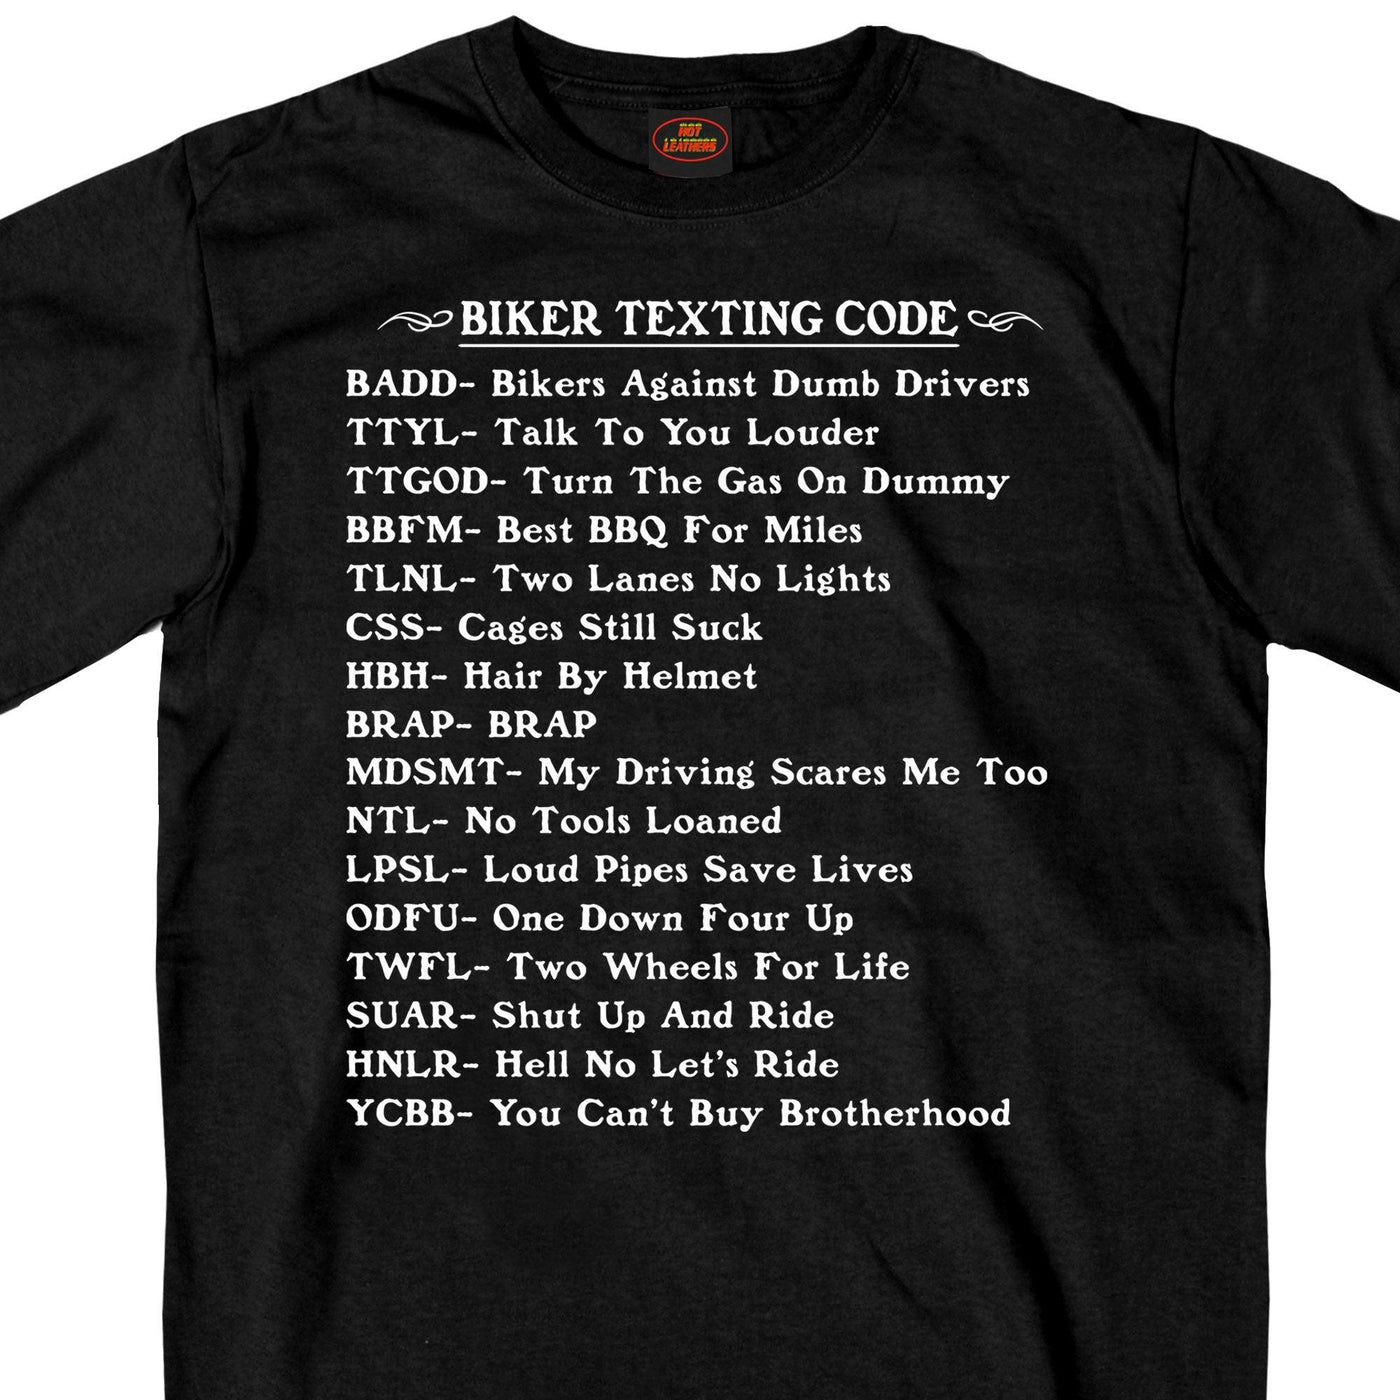 Hot Leathers Men's Biker Texting Code T-Shirt, Black - American Legend Rider